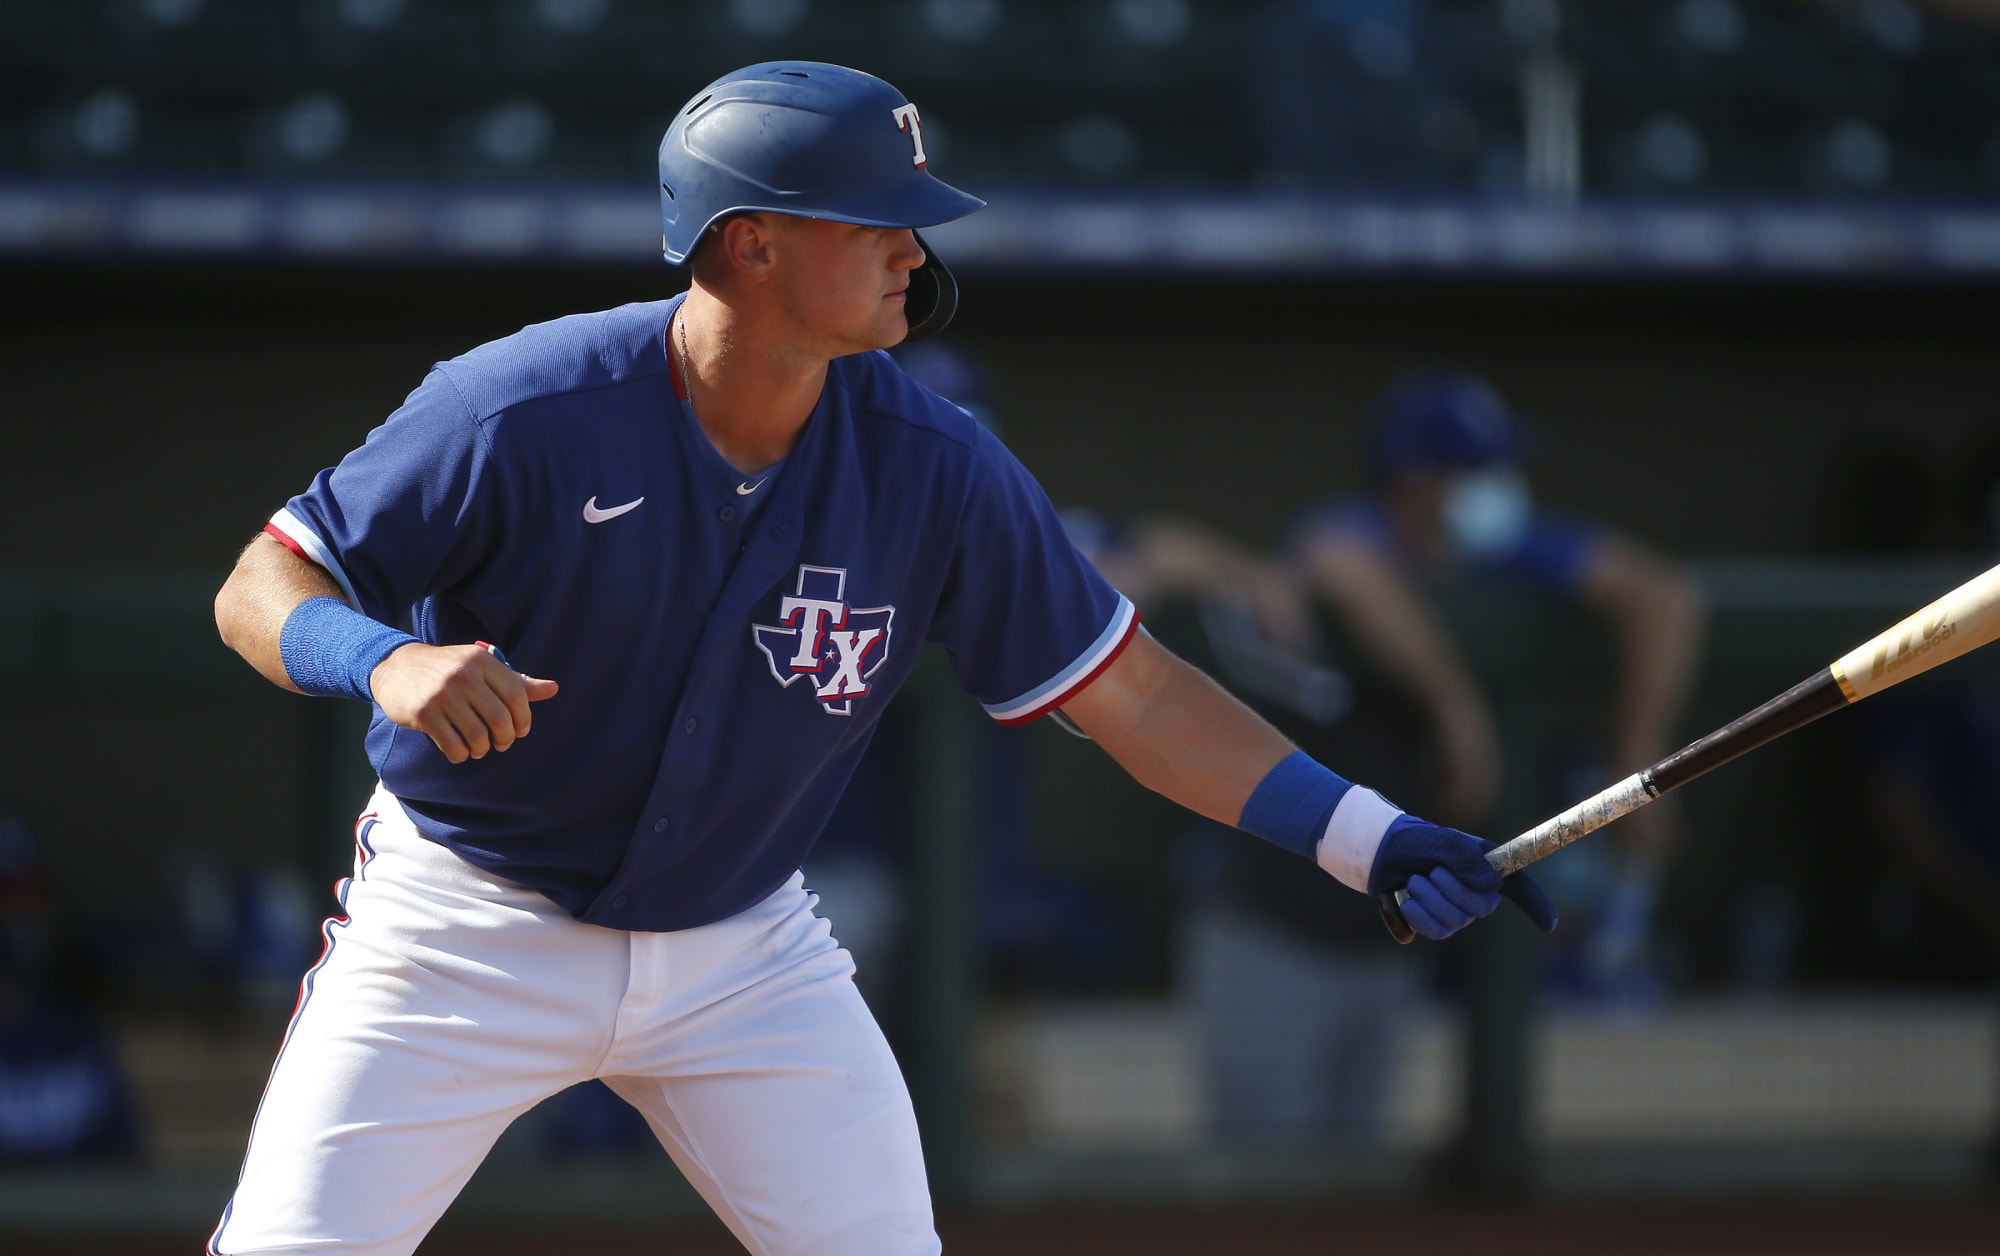 Texas Tech baseball alums: Josh Jung's season in jeopardy after broken thumb